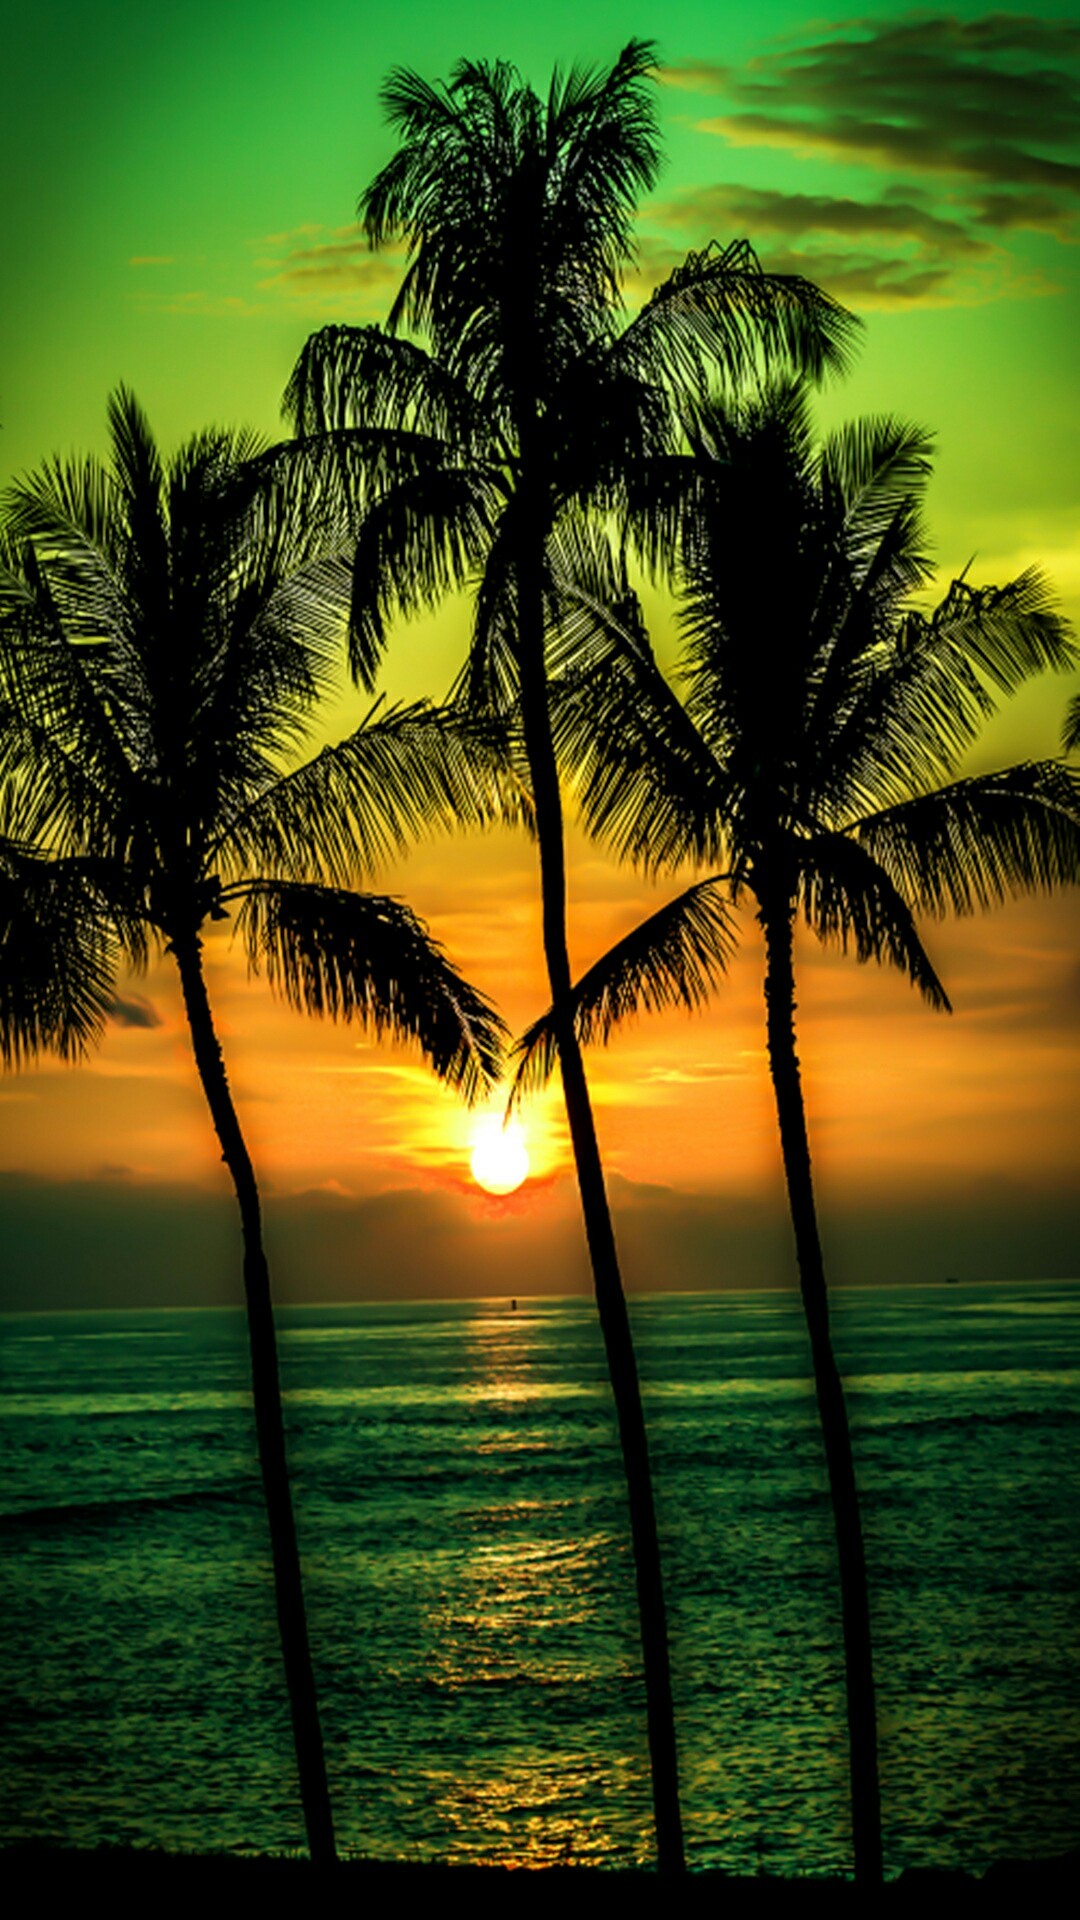 Sunset Beach Palm Tree Background : Sunset palm trees - Ontdek de